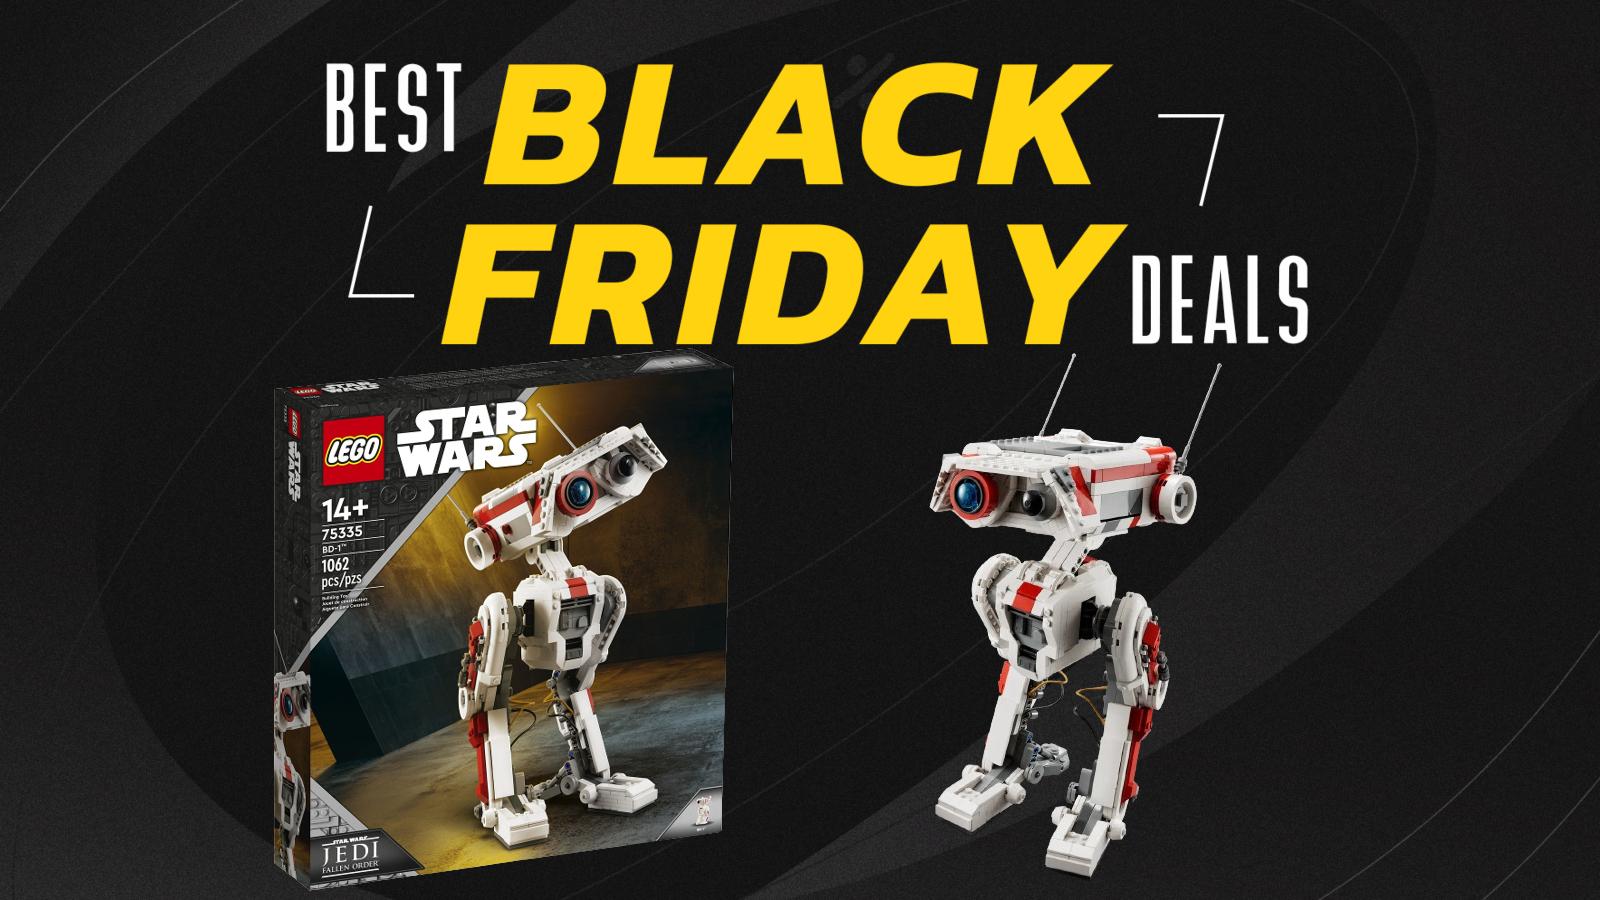 Black friday deals LEGO Star Wars BD-1 cover image